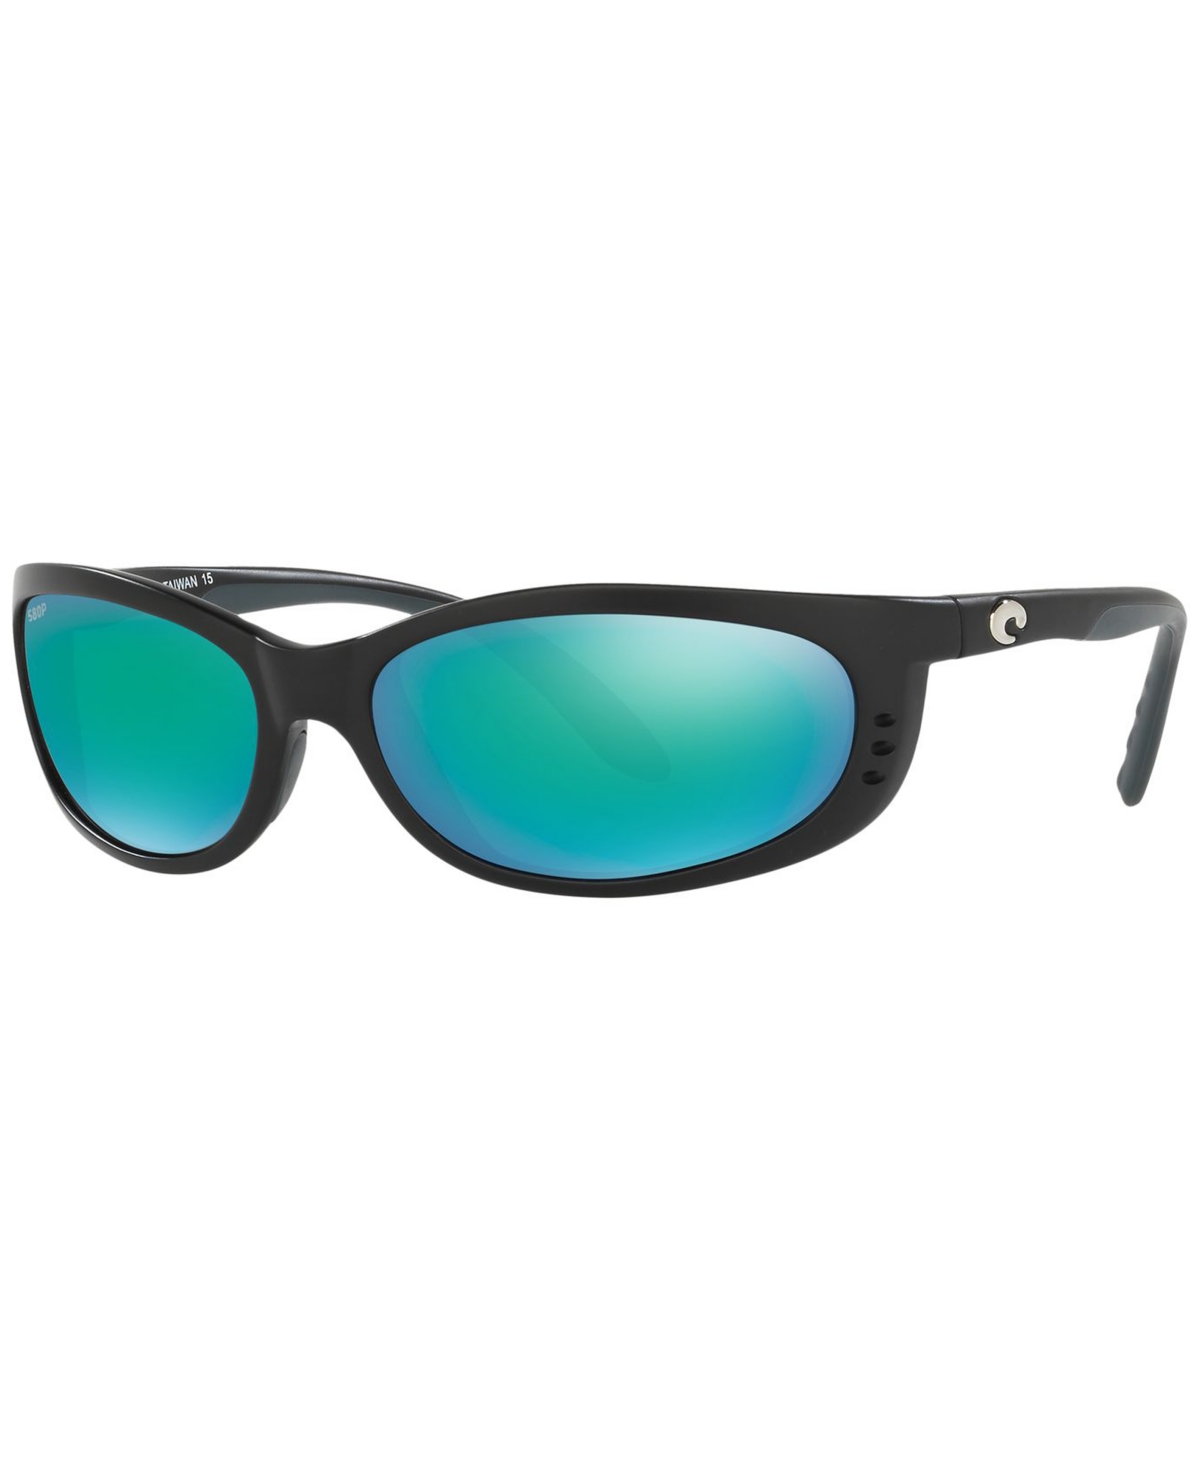 Polarized Sunglasses, Fathomp - BLACK MATTE/ BLUE POLAR